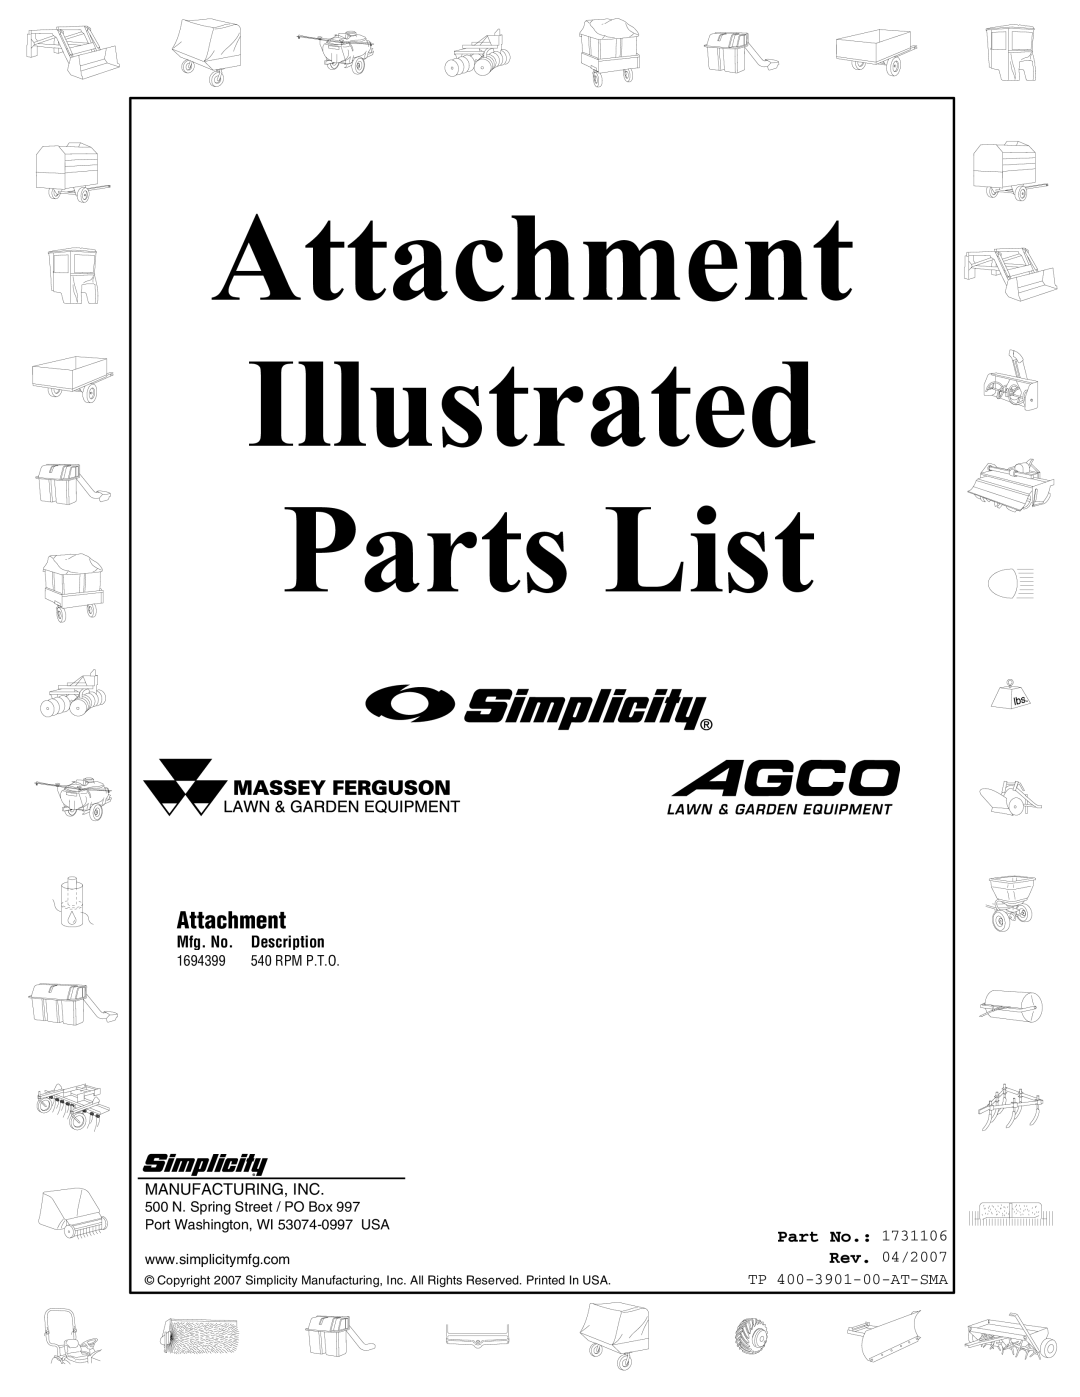 Simplicity 1694399 manual Attachment, Part No, Mfg. No, Description, Illustrated, Parts List, Rev. 04/2007 